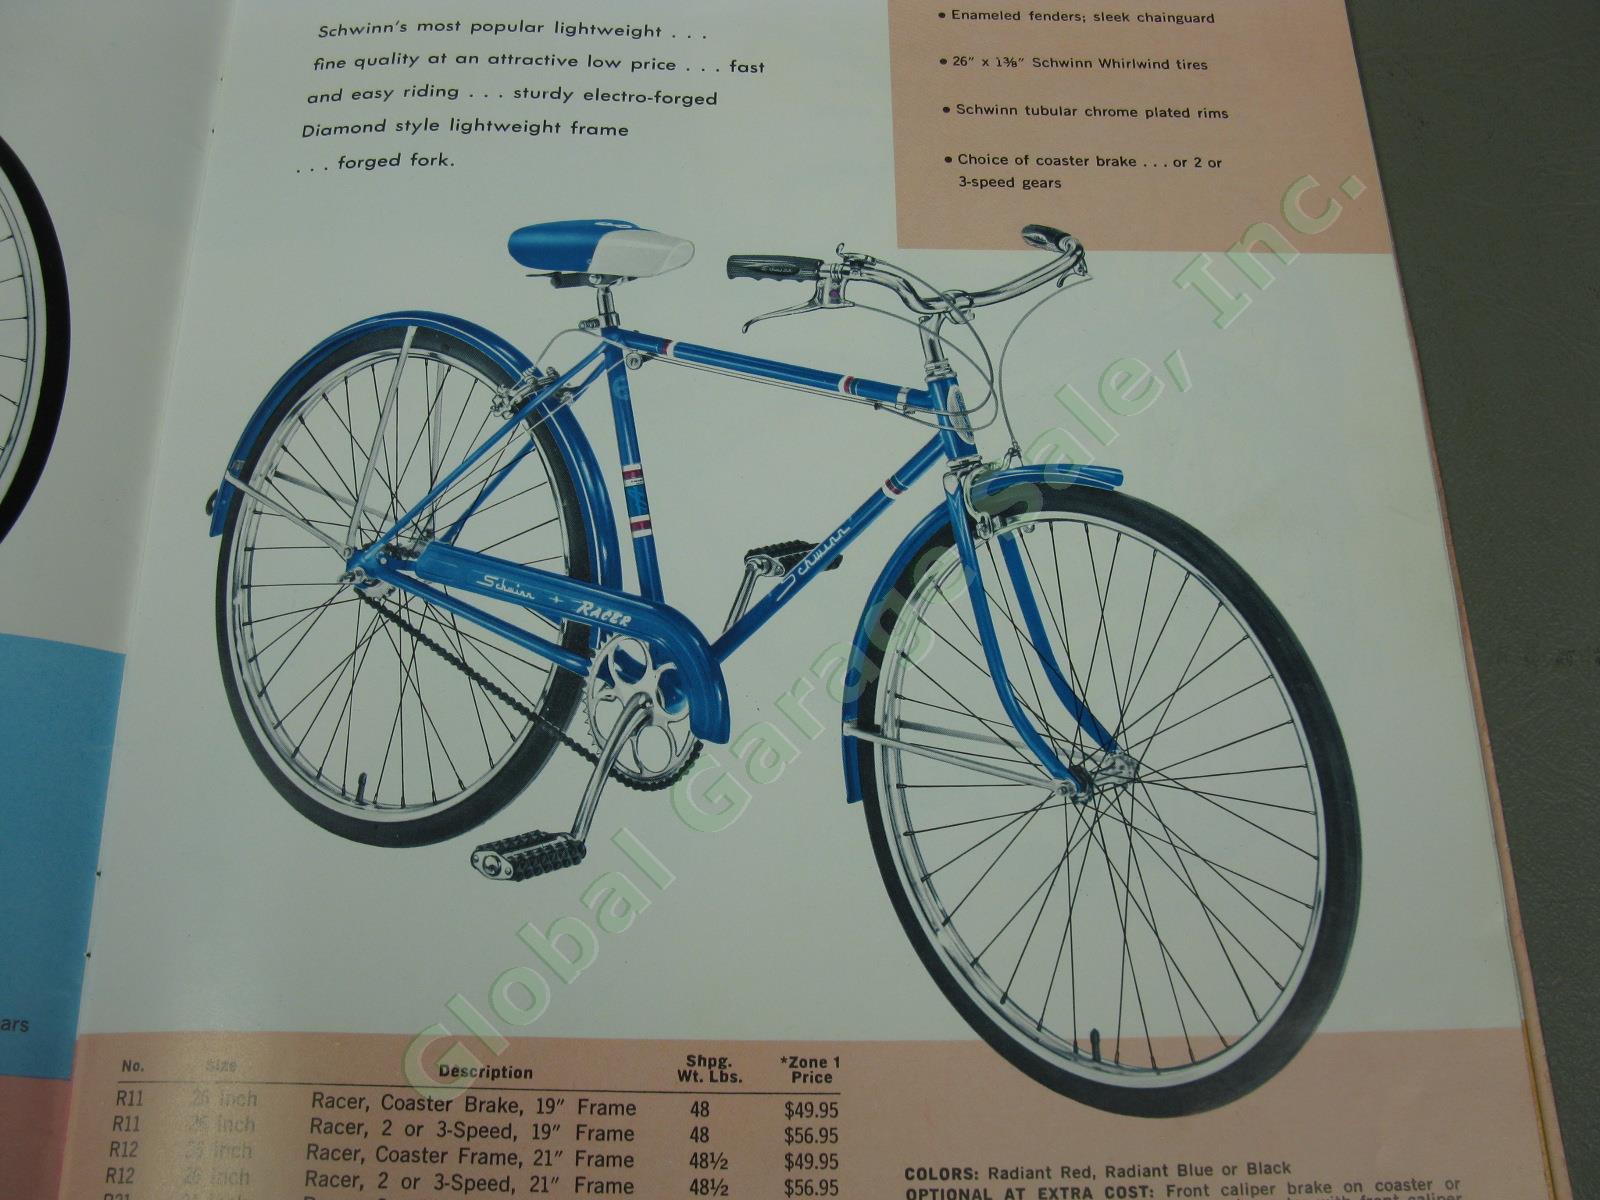 Vtg 1960s Arnold Schwinn Bicycle Dealer Part Accessory Service Manual Binder Lot 9